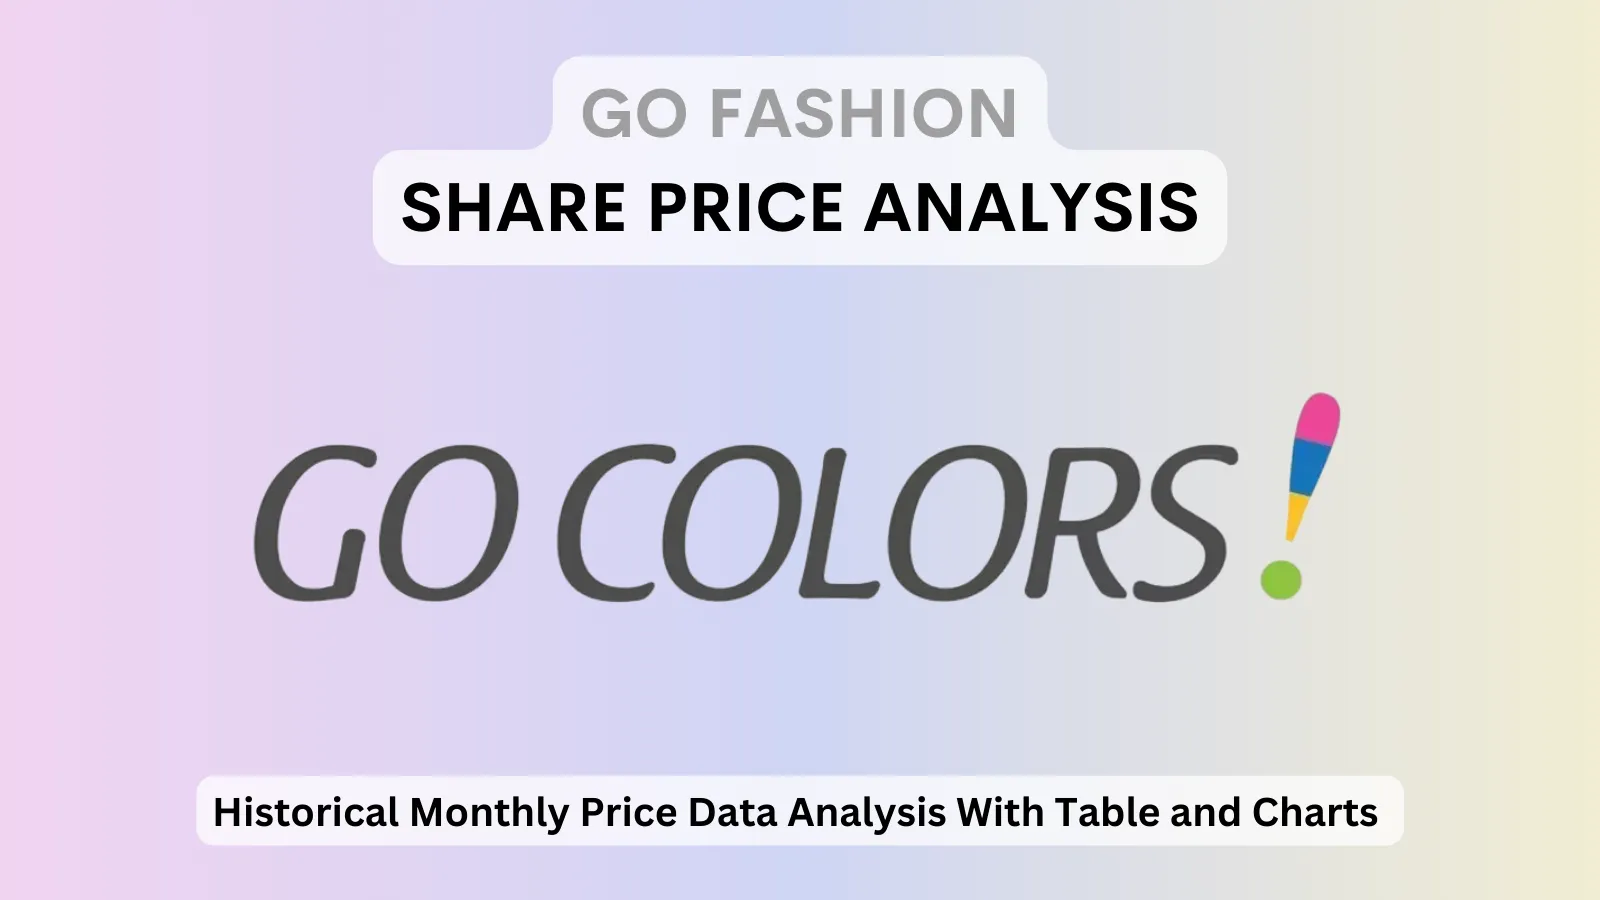 Go Fashion share price analysis